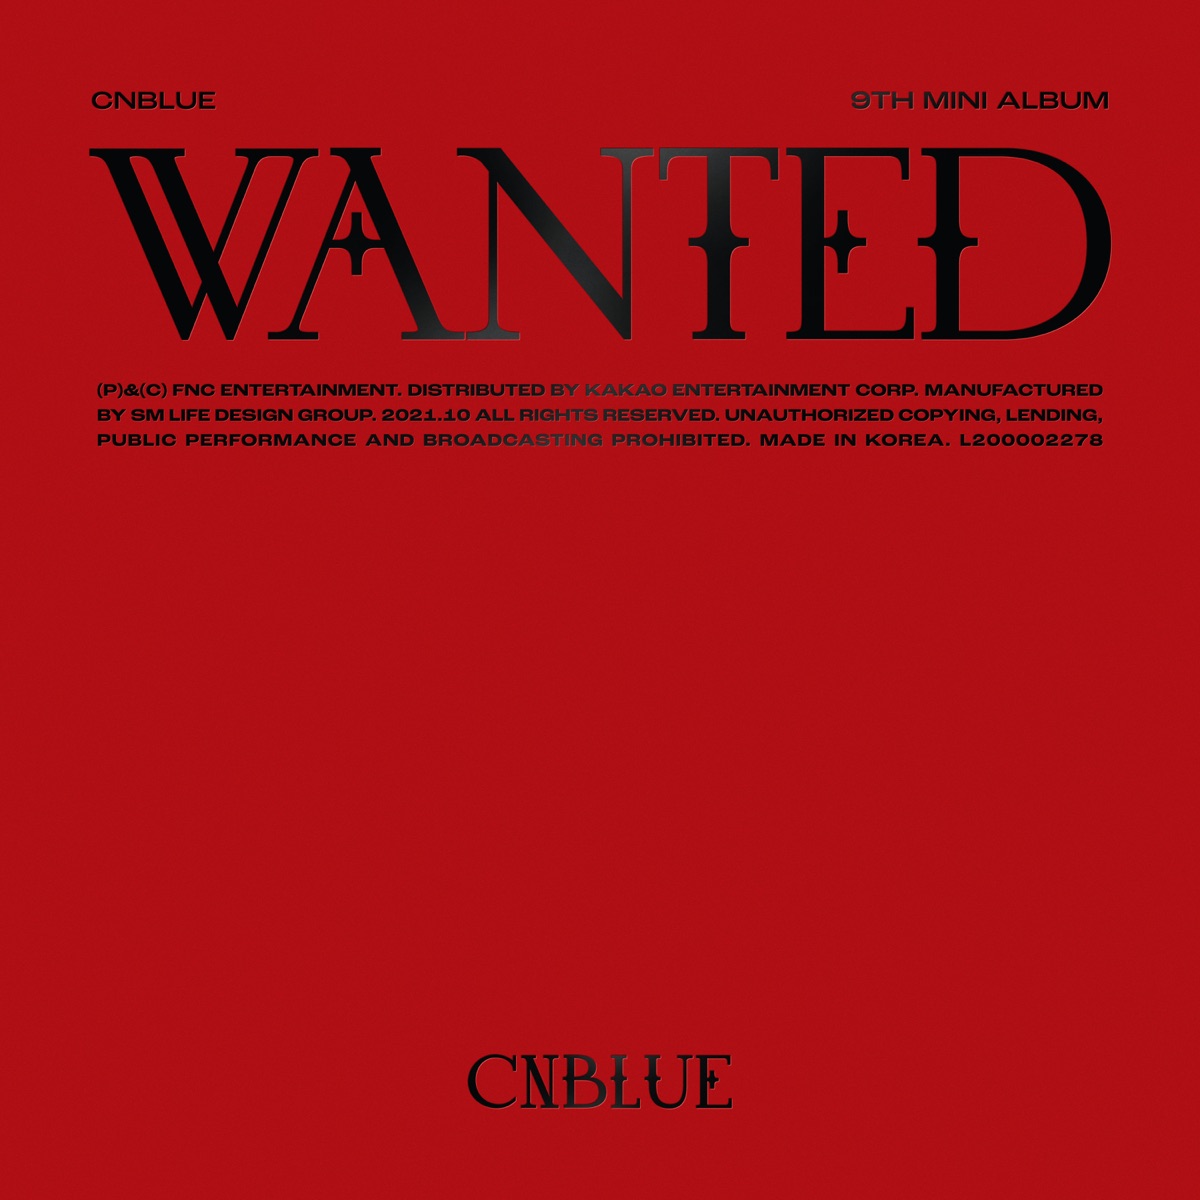 『CNBLUE - Nothing 歌詞』収録の『WANTED』ジャケット